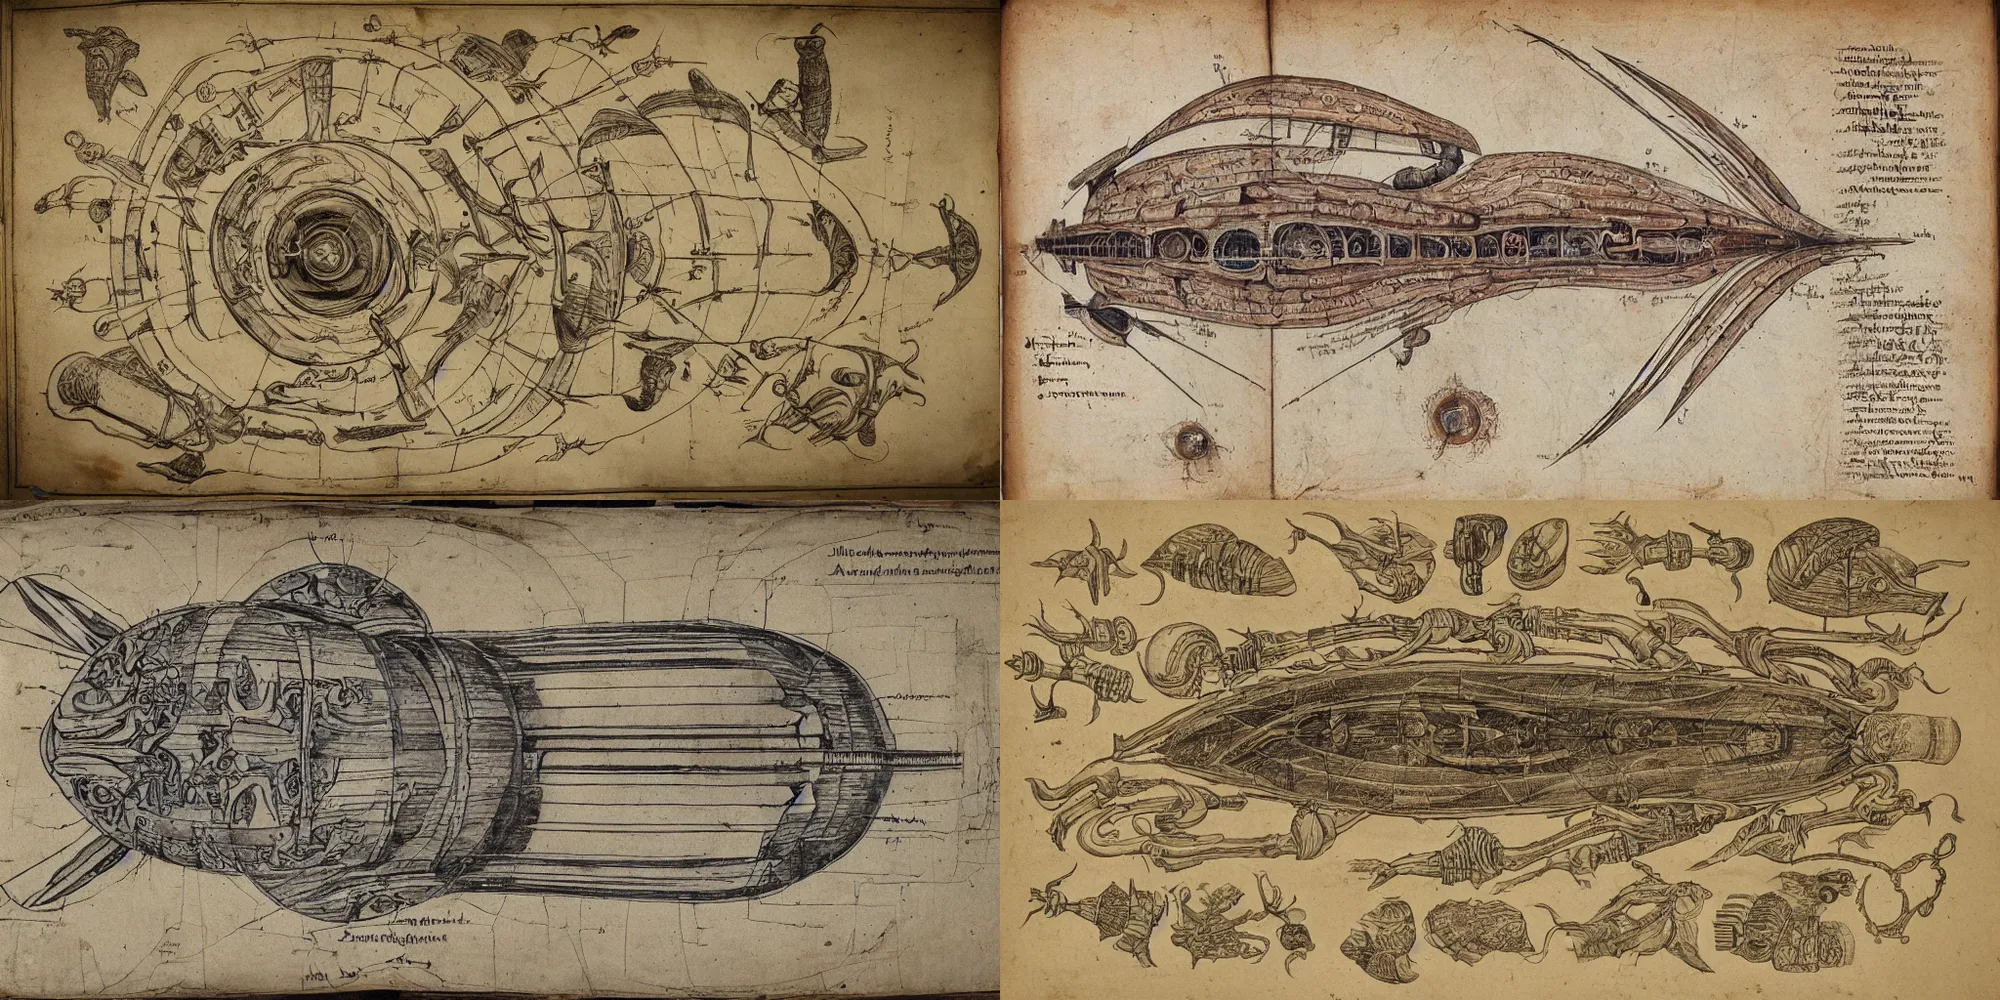 Prompt: Ancient manuscript anatomical diagram of an interstellar starship, spaceship, mothership